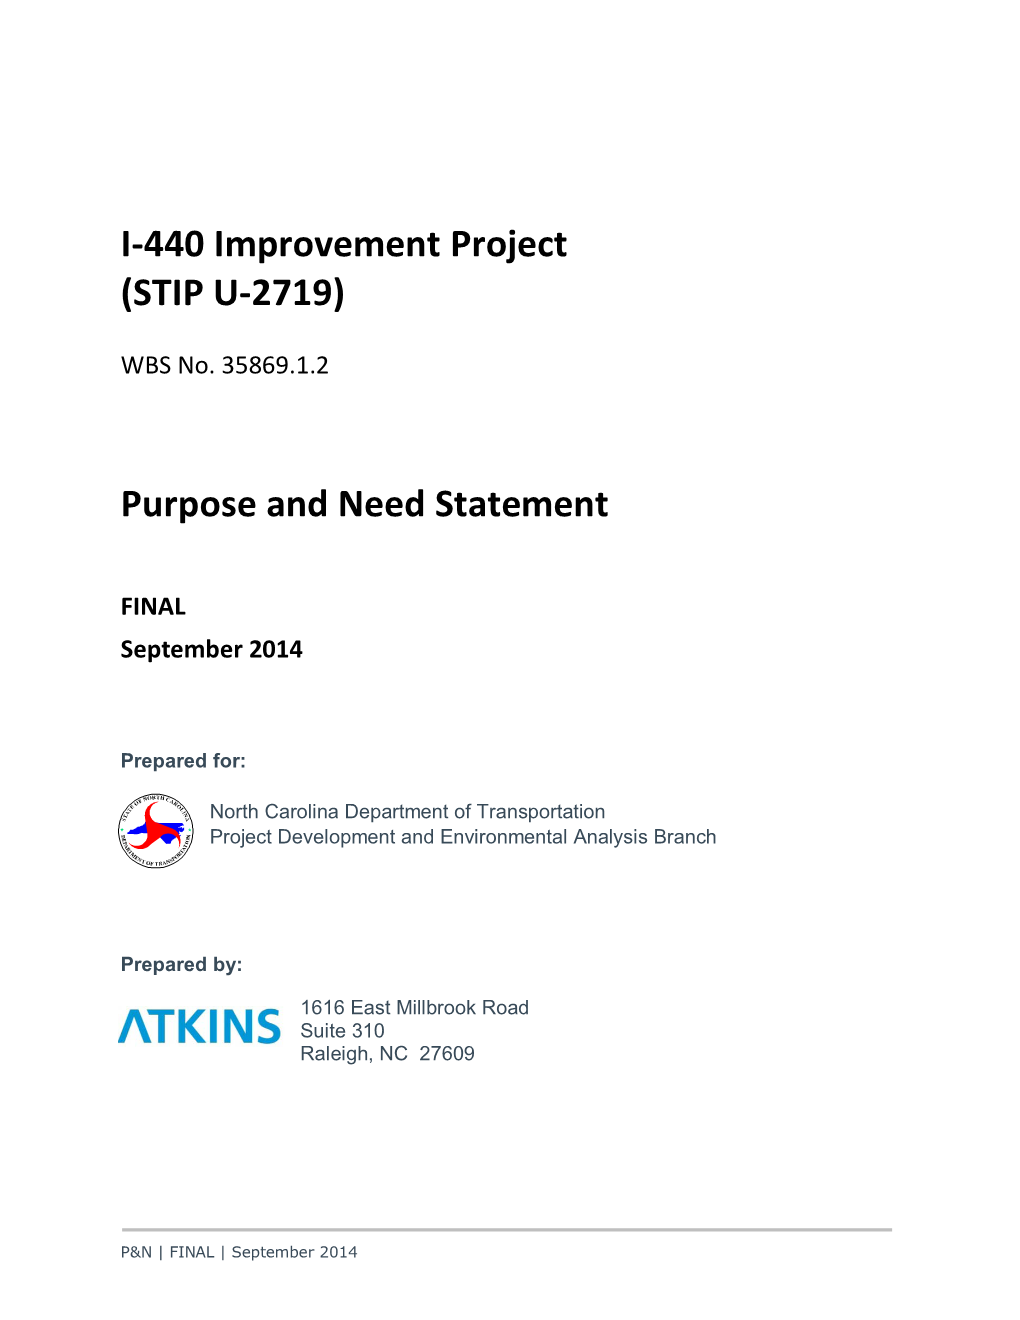 I-440 Improvement Project (STIP U-2719) (Atkins, June 2014)